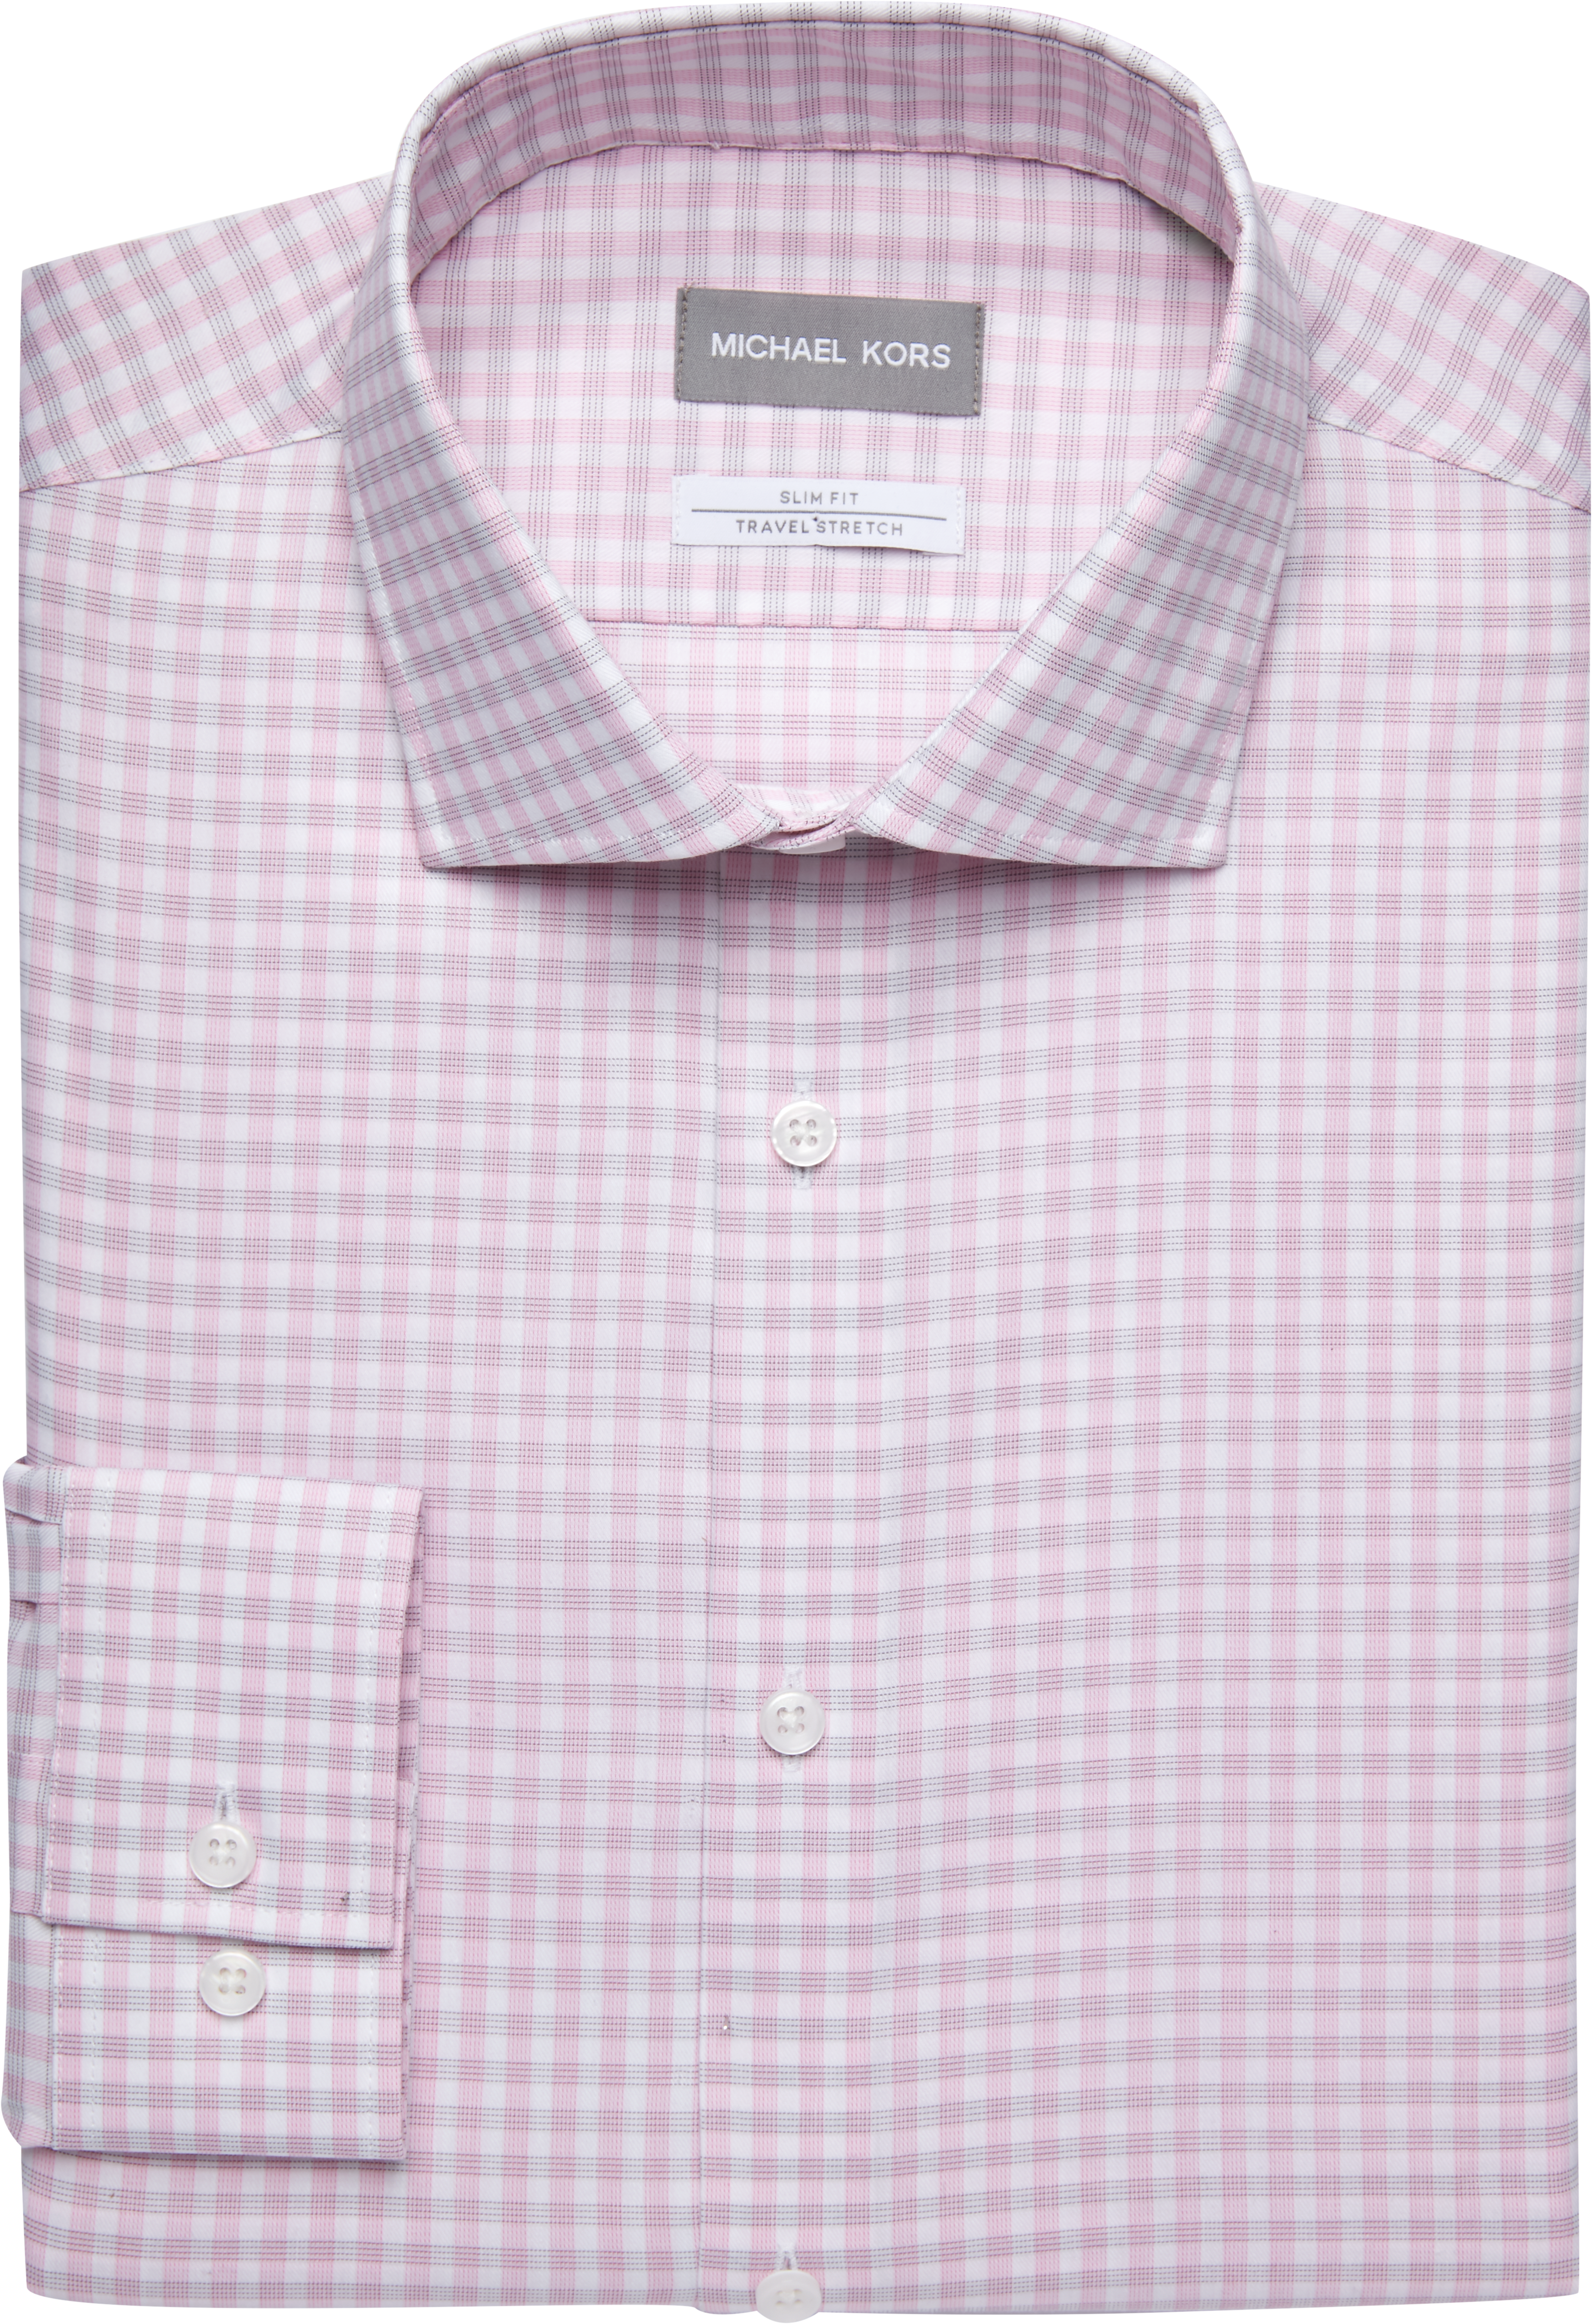 michael kors t shirt mens pink